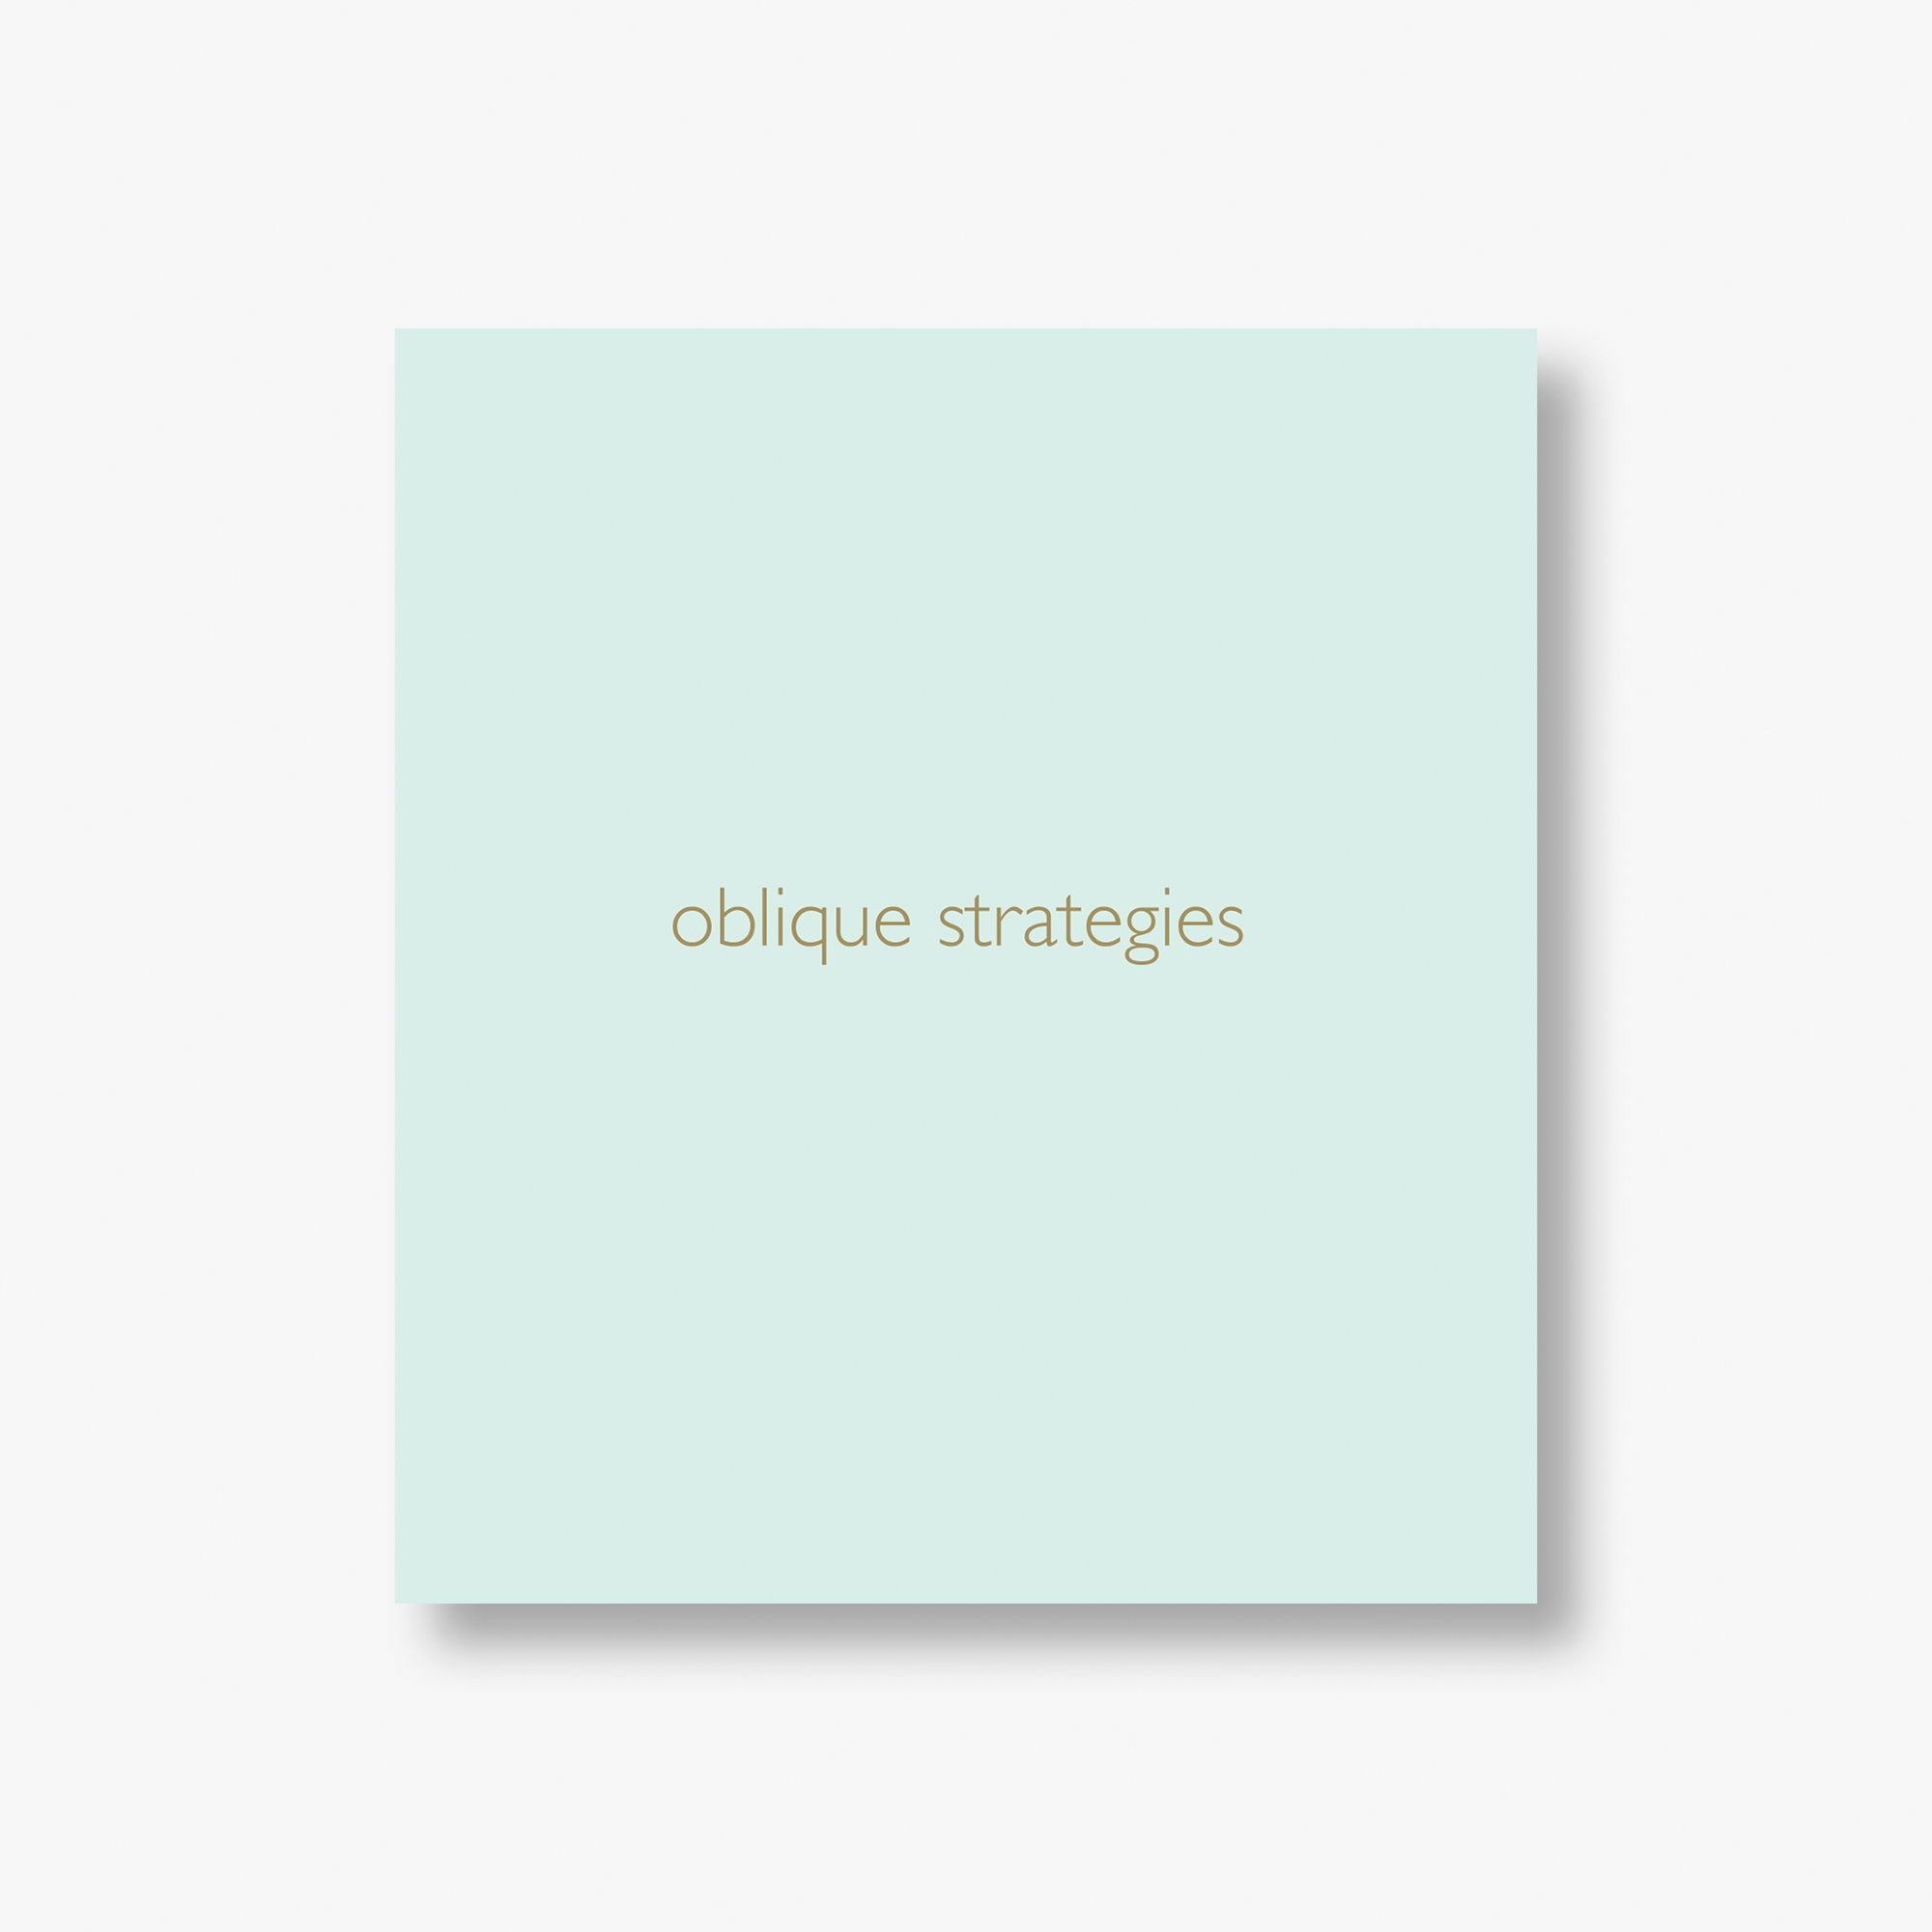 oblique strategies